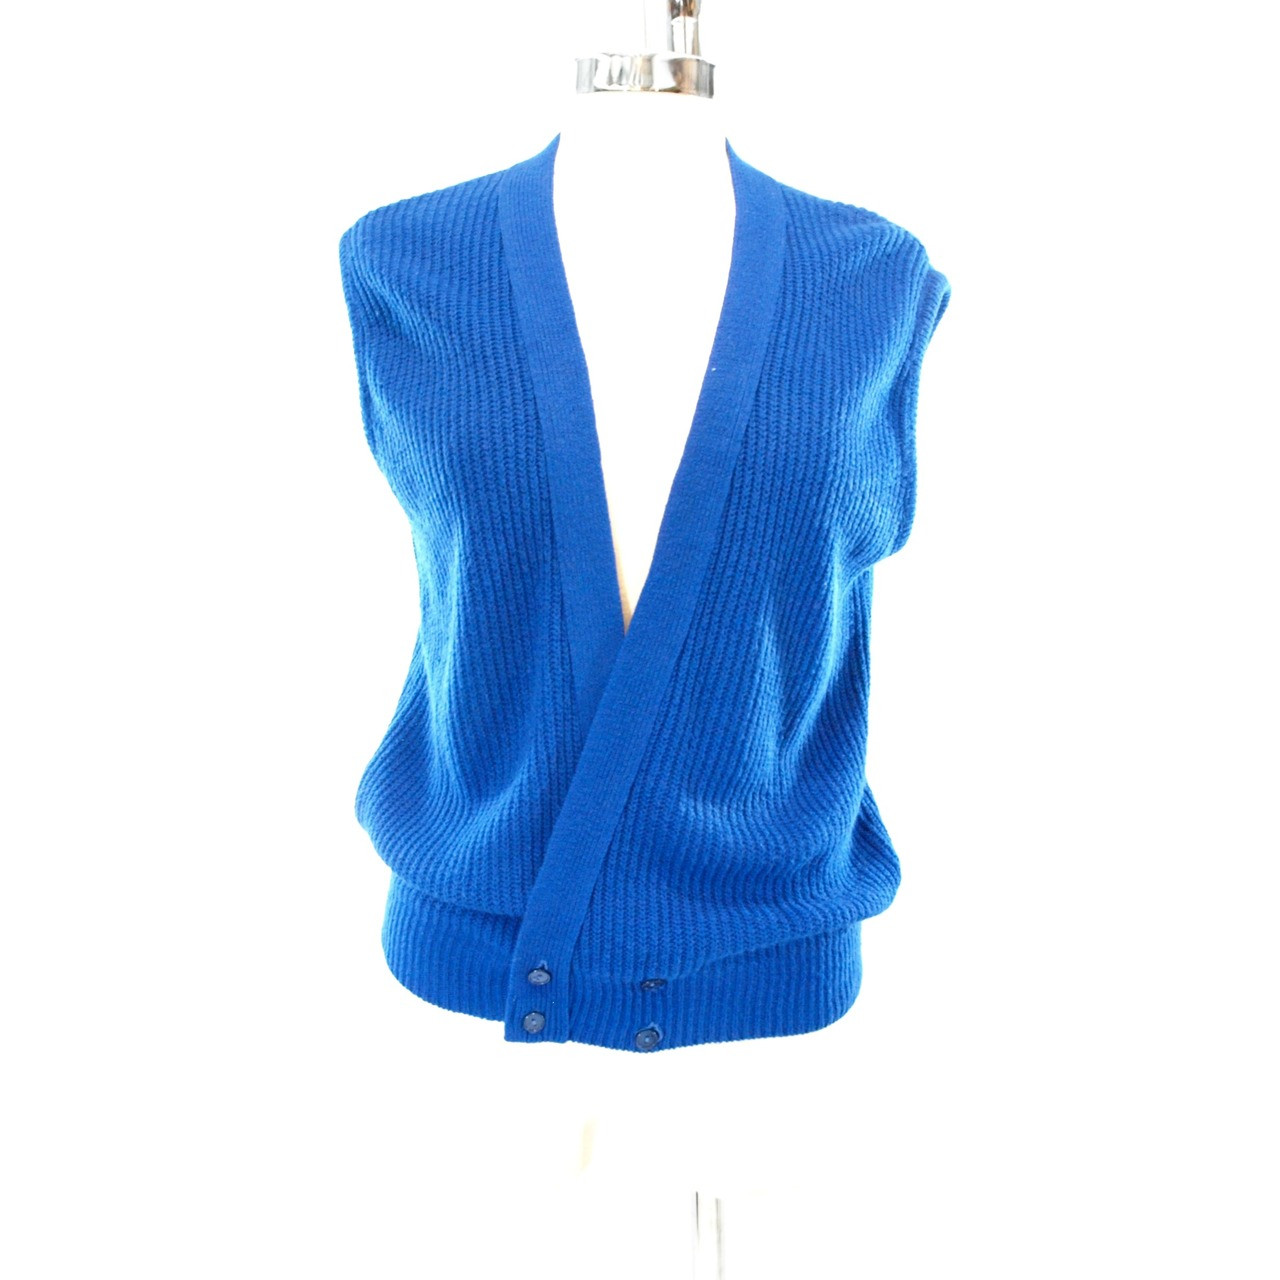 BLUE SWEATER VEST. 1980s Cardigan Vest. Size Medium.